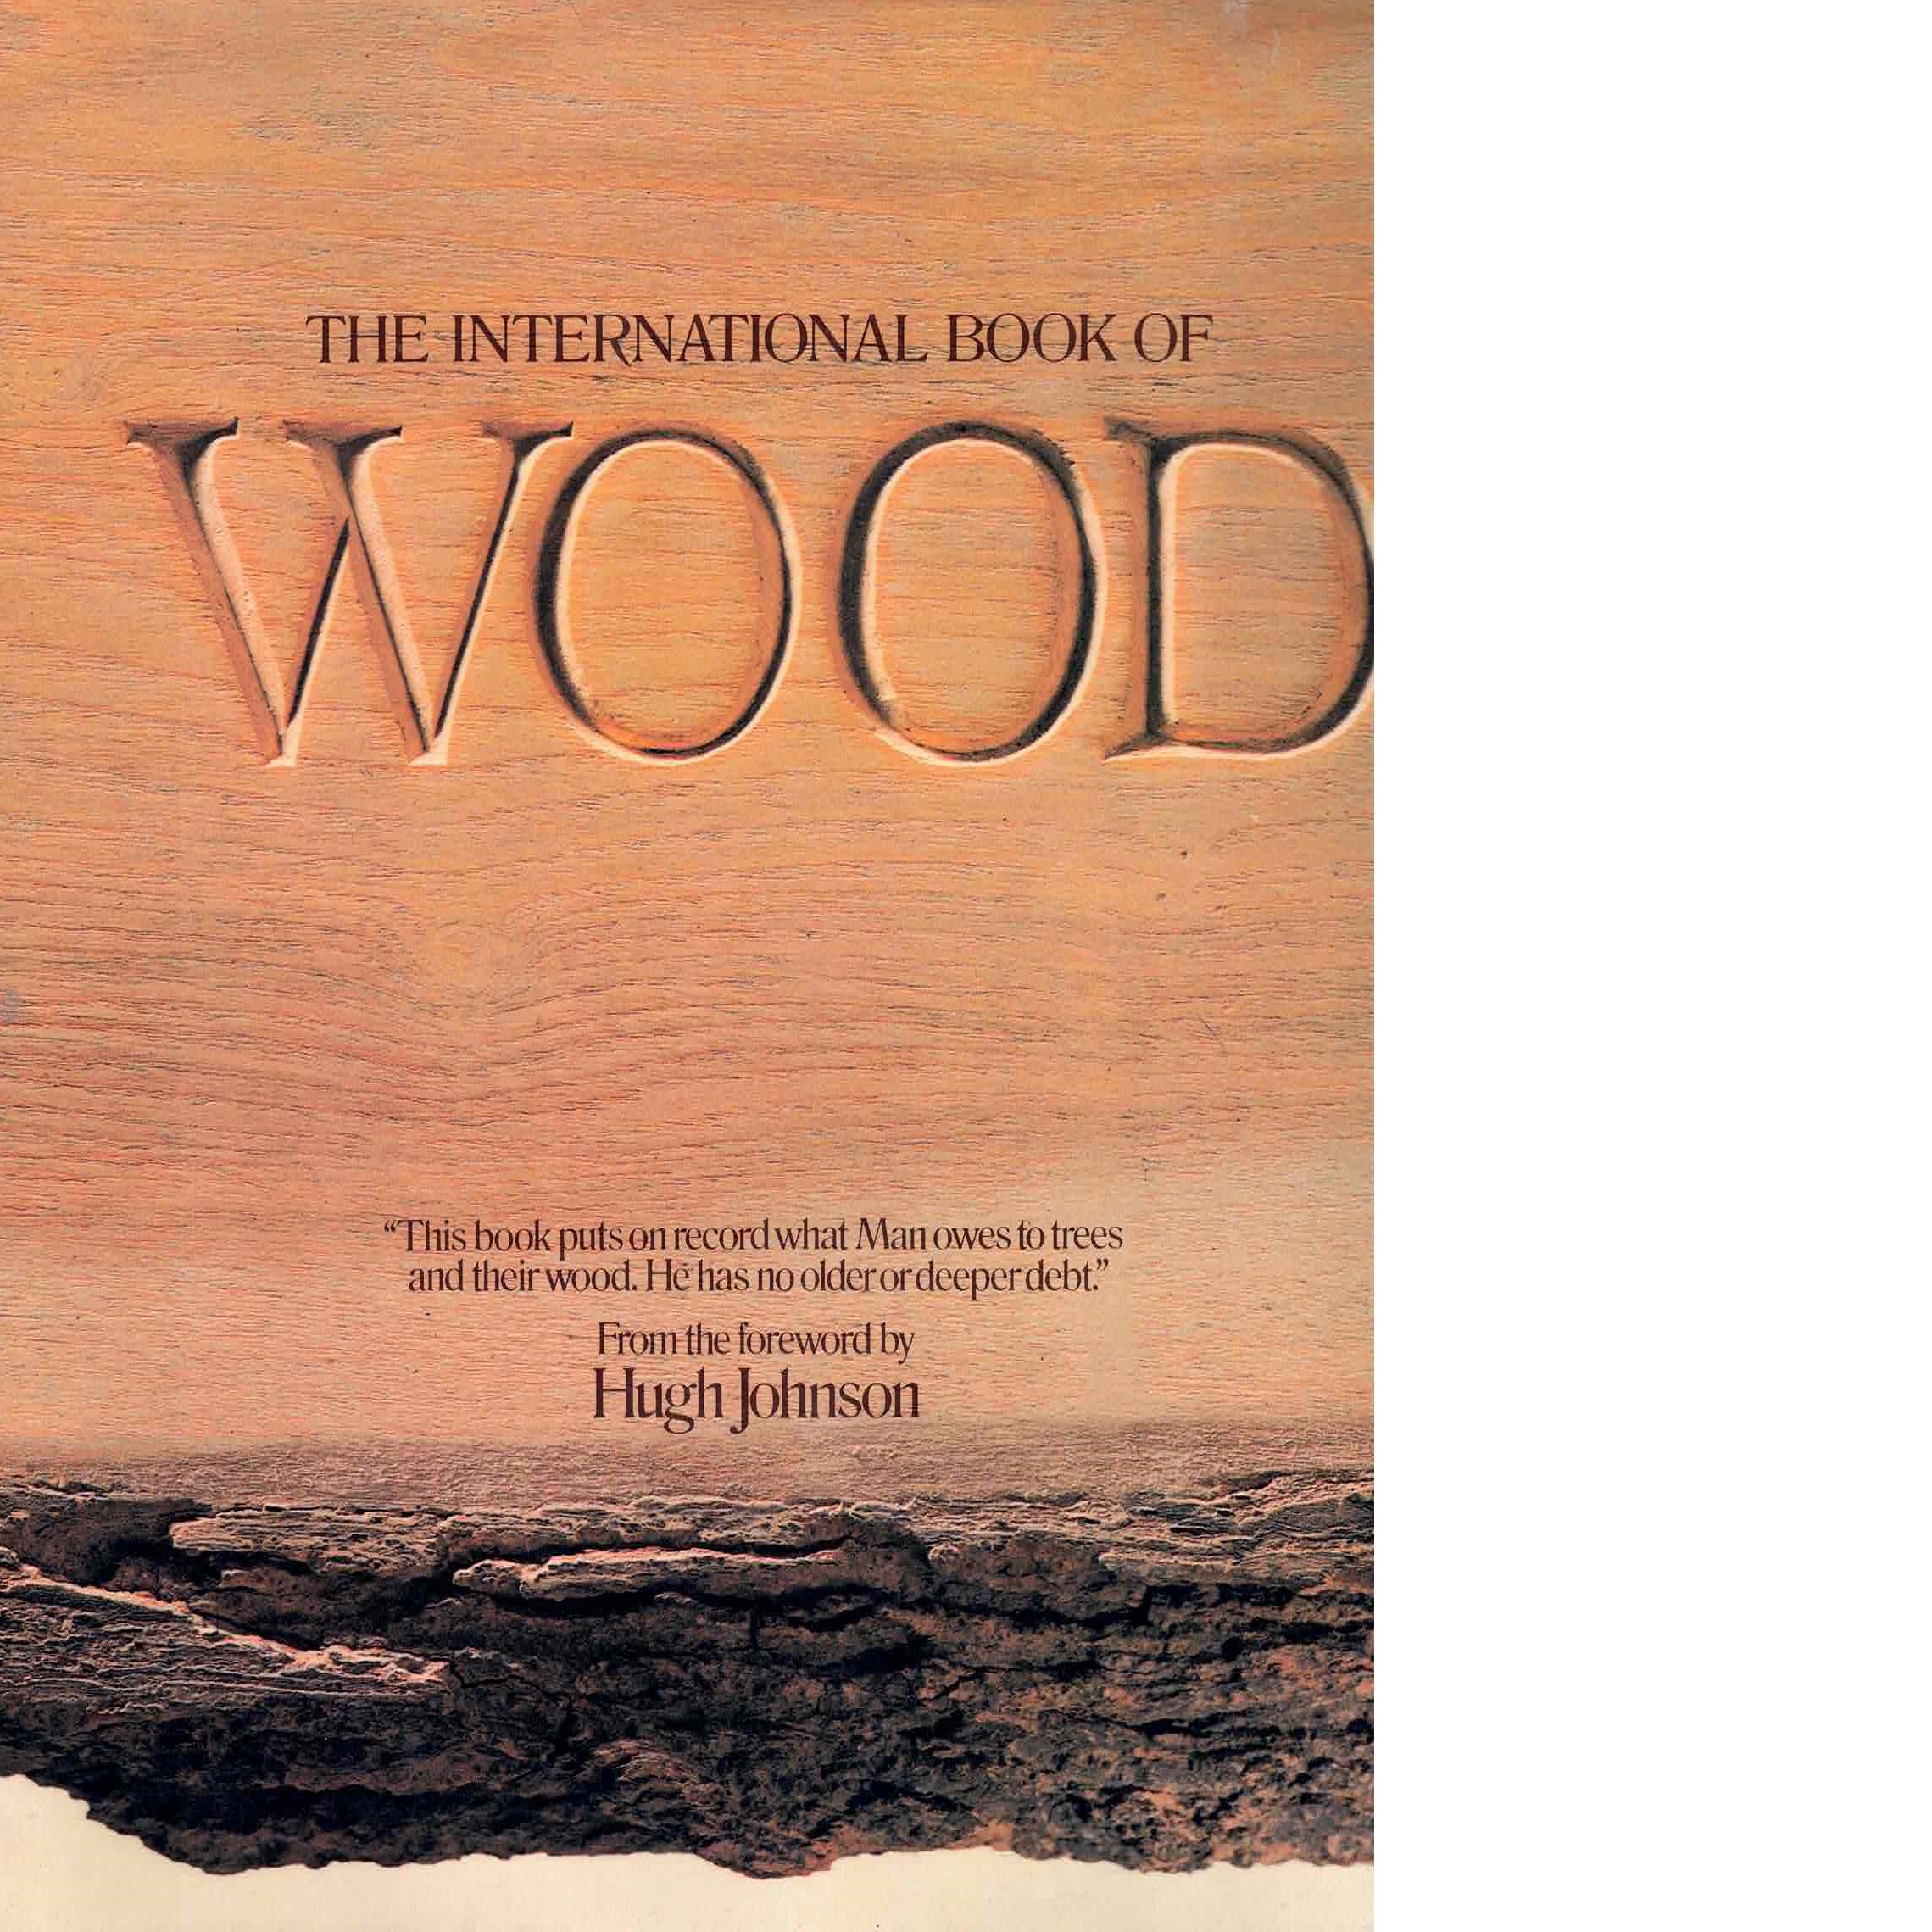 The international book of wood - Red. Bramwell, Martyn